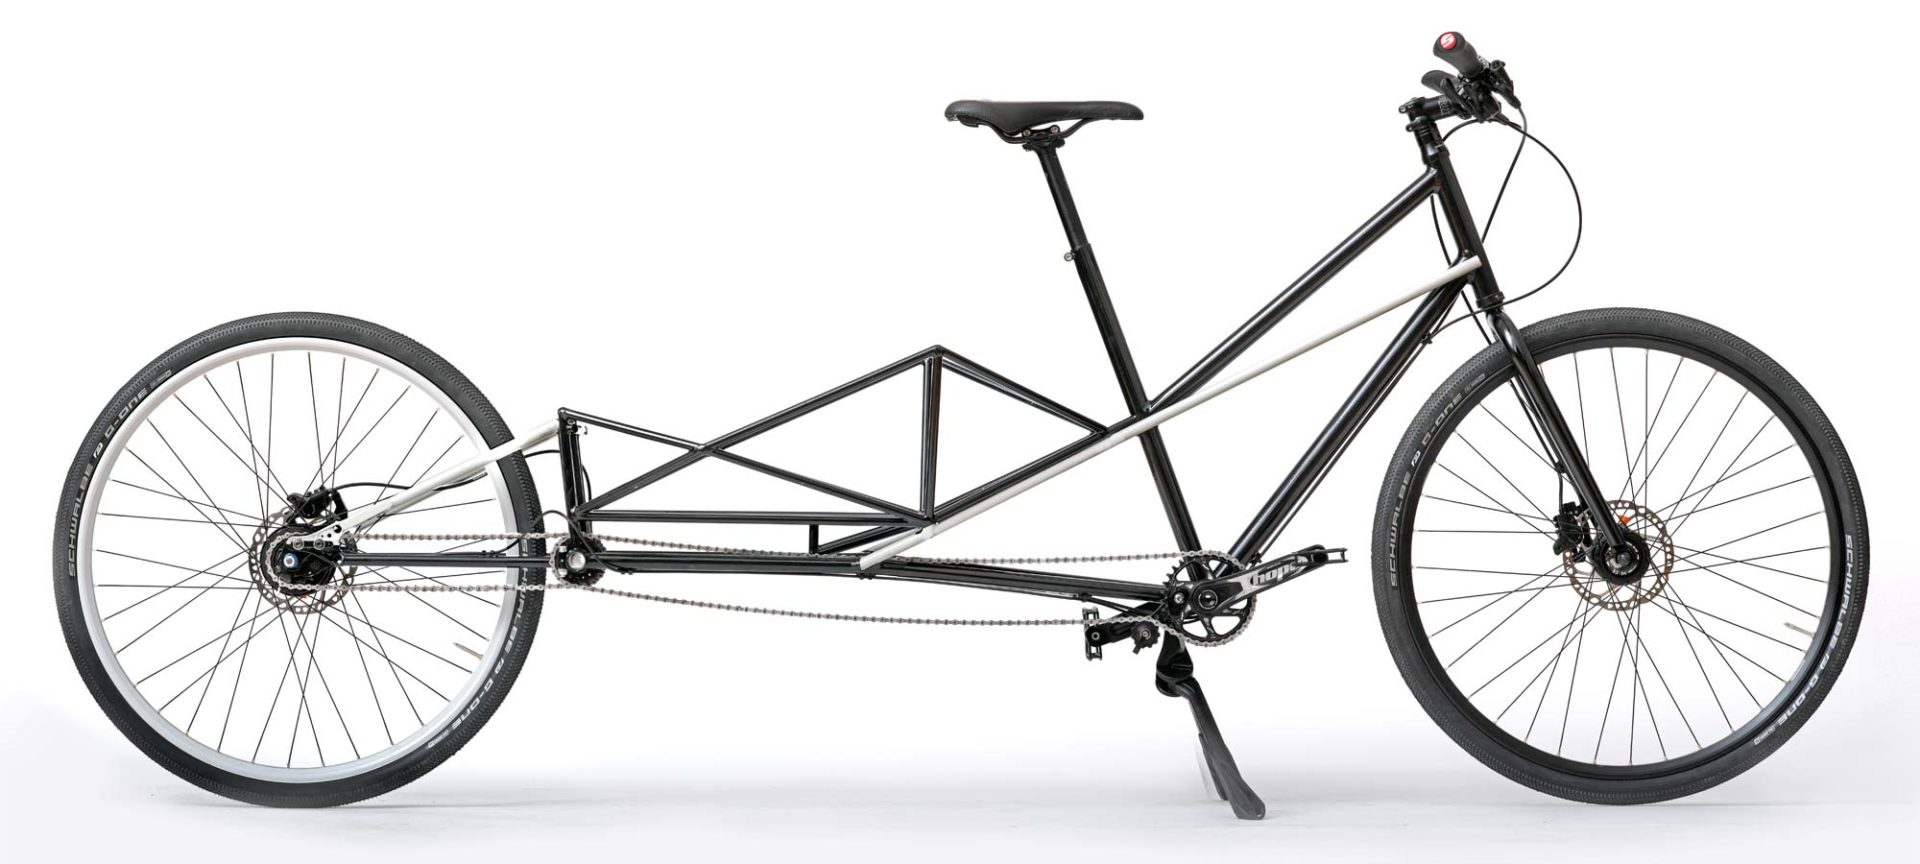 Convercyle-folding-cargo-bike_collapsible-cargo-city-urban-commuter-bike_extended-1920x864.jpg